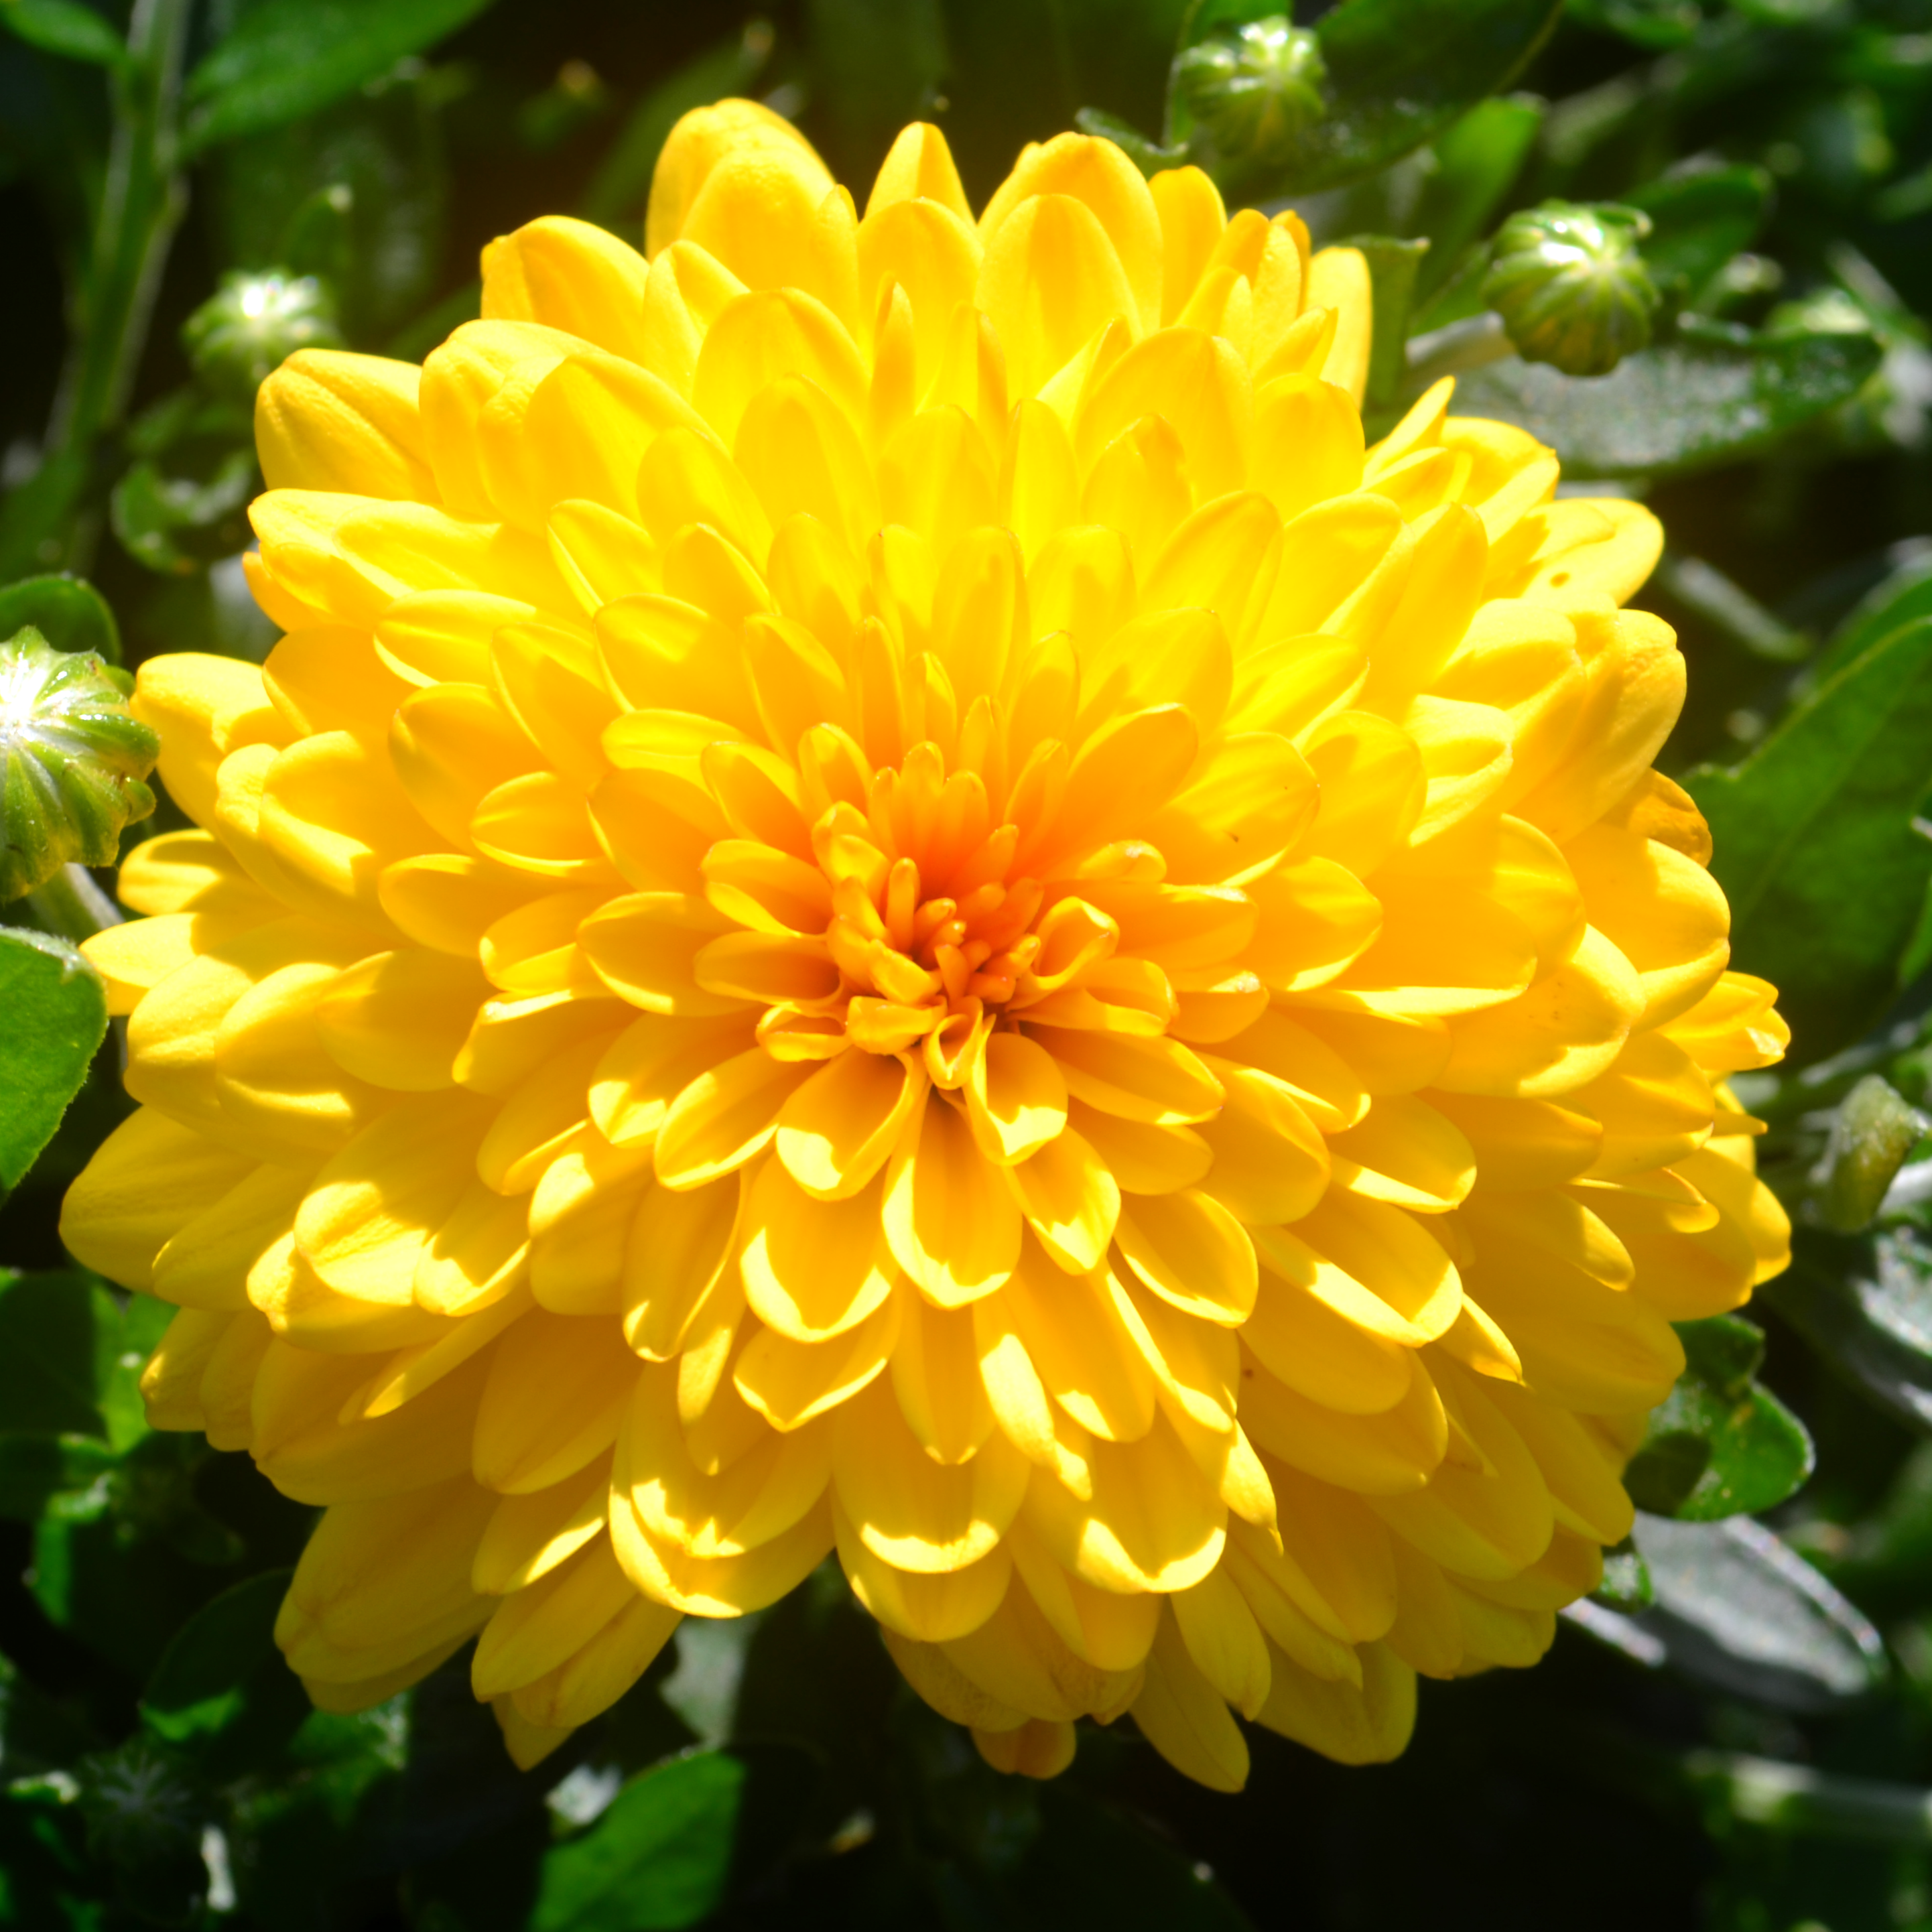 Chrysanthemum Cheryl 'Golden' - Mum from Hillcrest Nursery